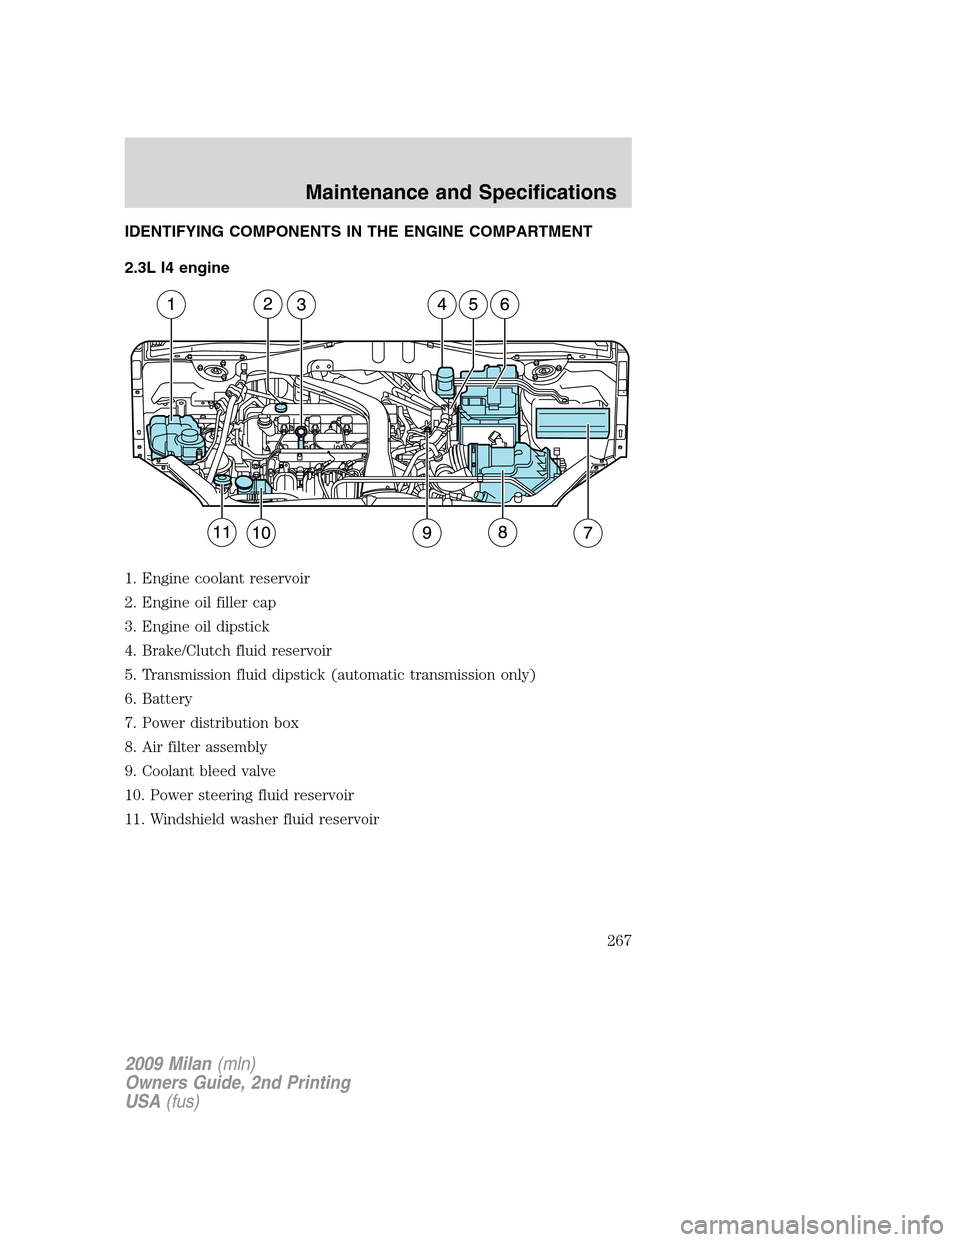 Mercury Milan 2009  Owners Manuals IDENTIFYING COMPONENTS IN THE ENGINE COMPARTMENT
2.3L I4 engine
1. Engine coolant reservoir
2. Engine oil filler cap
3. Engine oil dipstick
4. Brake/Clutch fluid reservoir
5. Transmission fluid dipsti